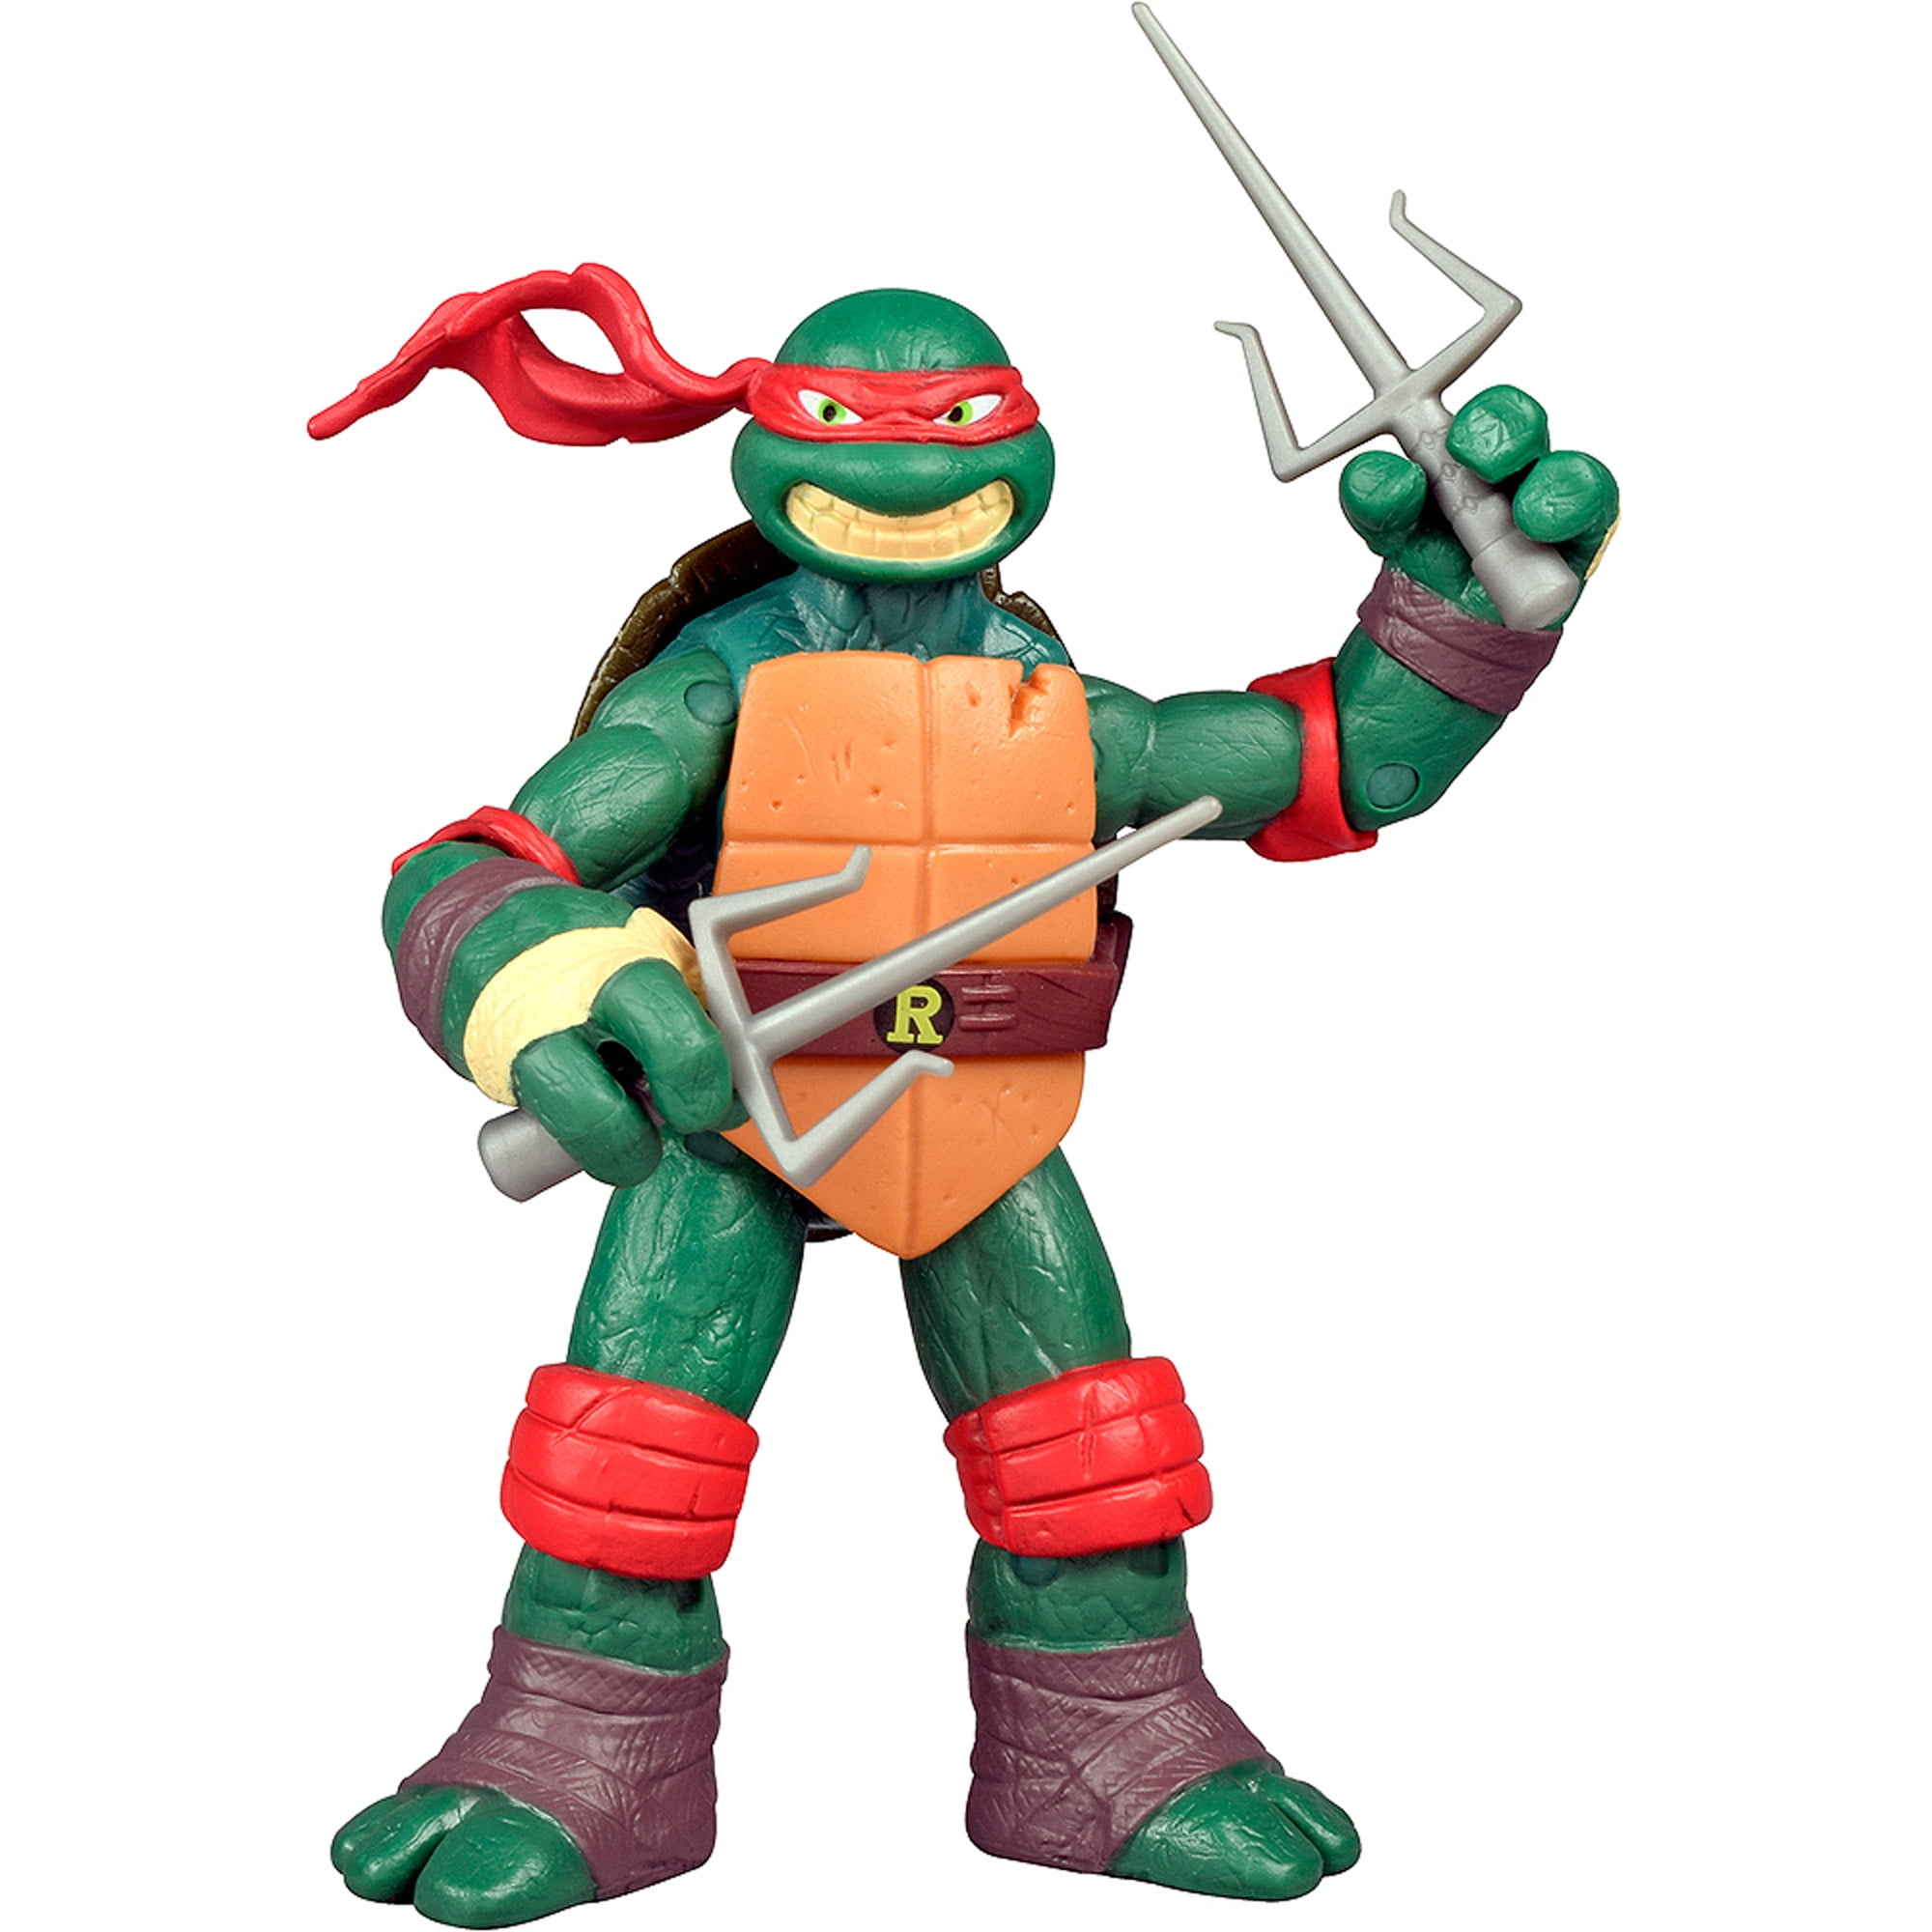 Nickelodeon Teenage Mutant Ninja Turtles Re-Deco Action Figure